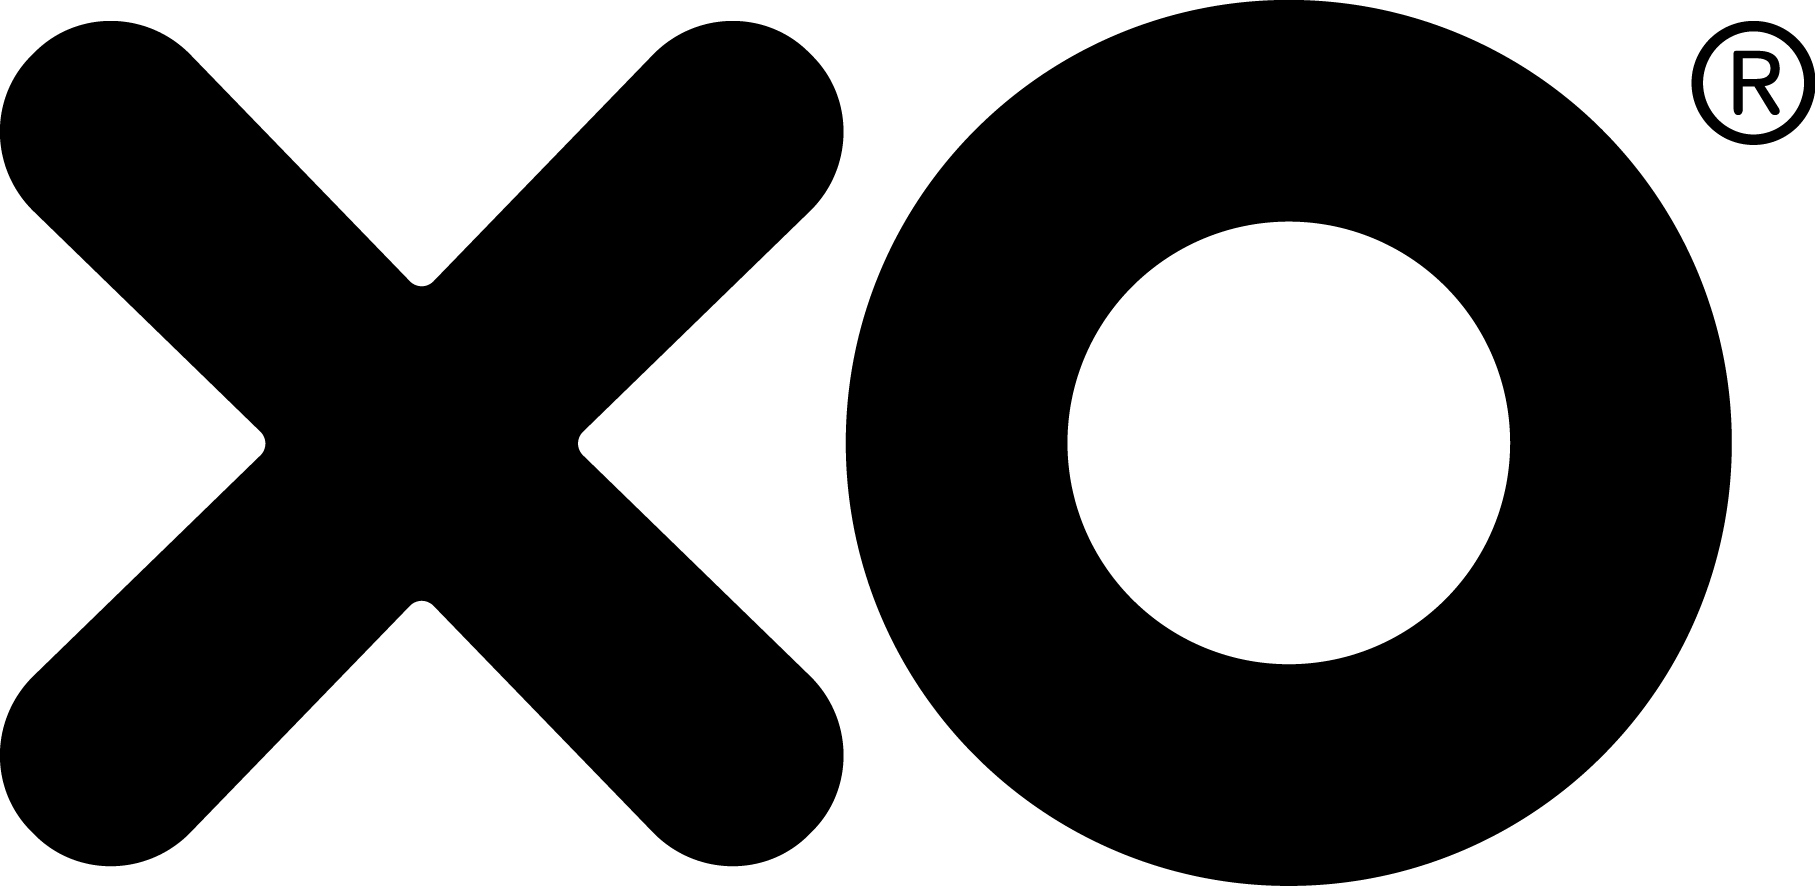 X o game. O X логотип. Значок XO. Надпись XO. XO Team лого.